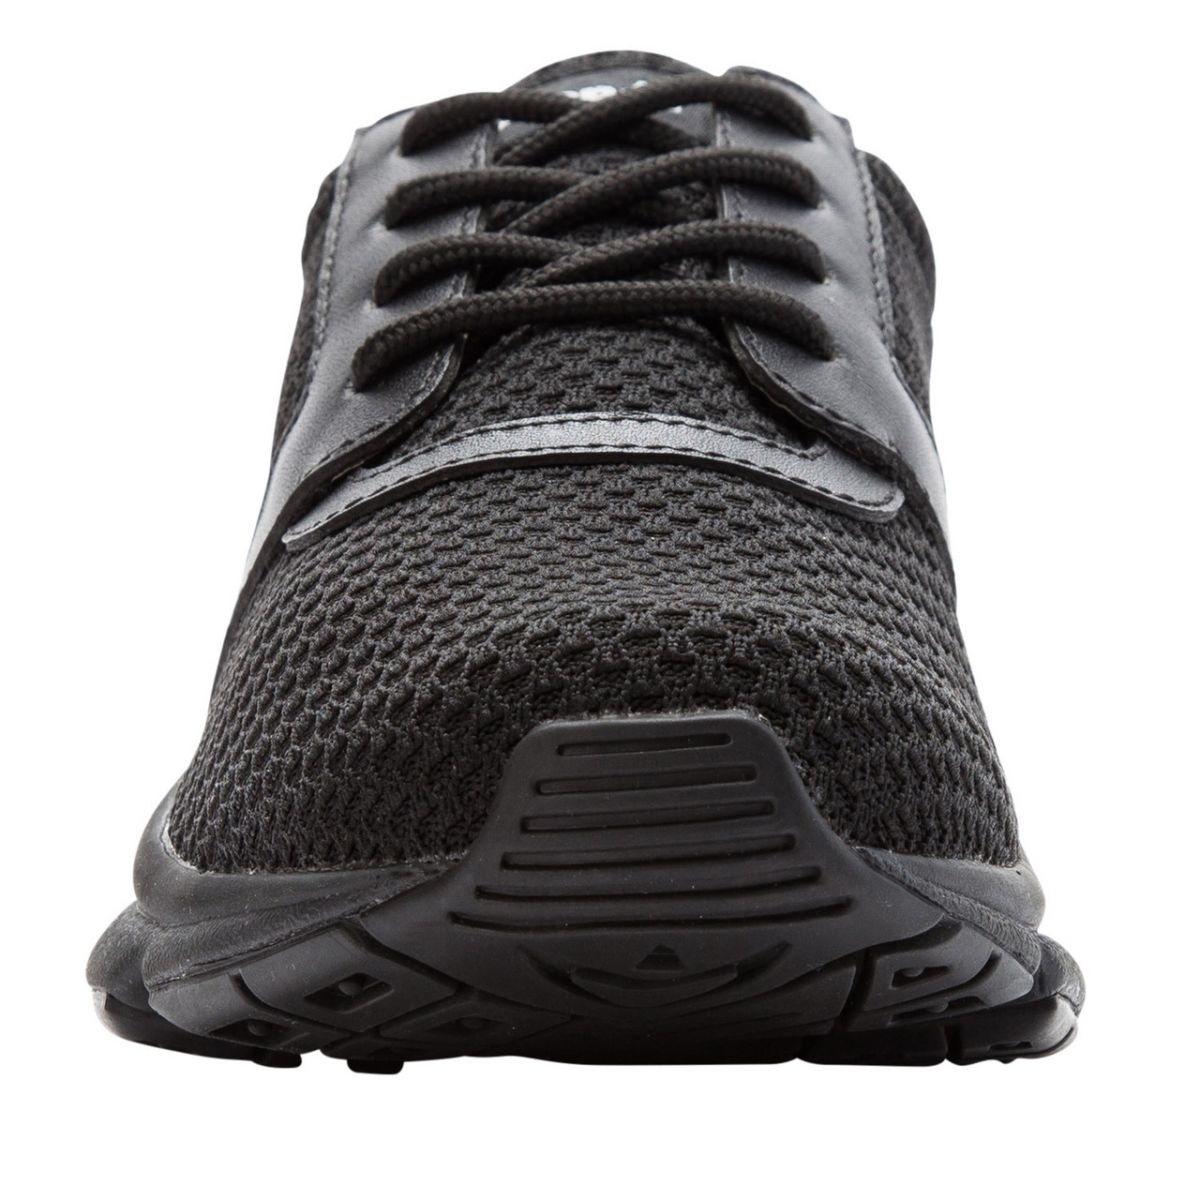 Propet Women's Stability X Walking Shoe Black - WAA032MBLK BLACK - BLACK, 10.5 Narrow